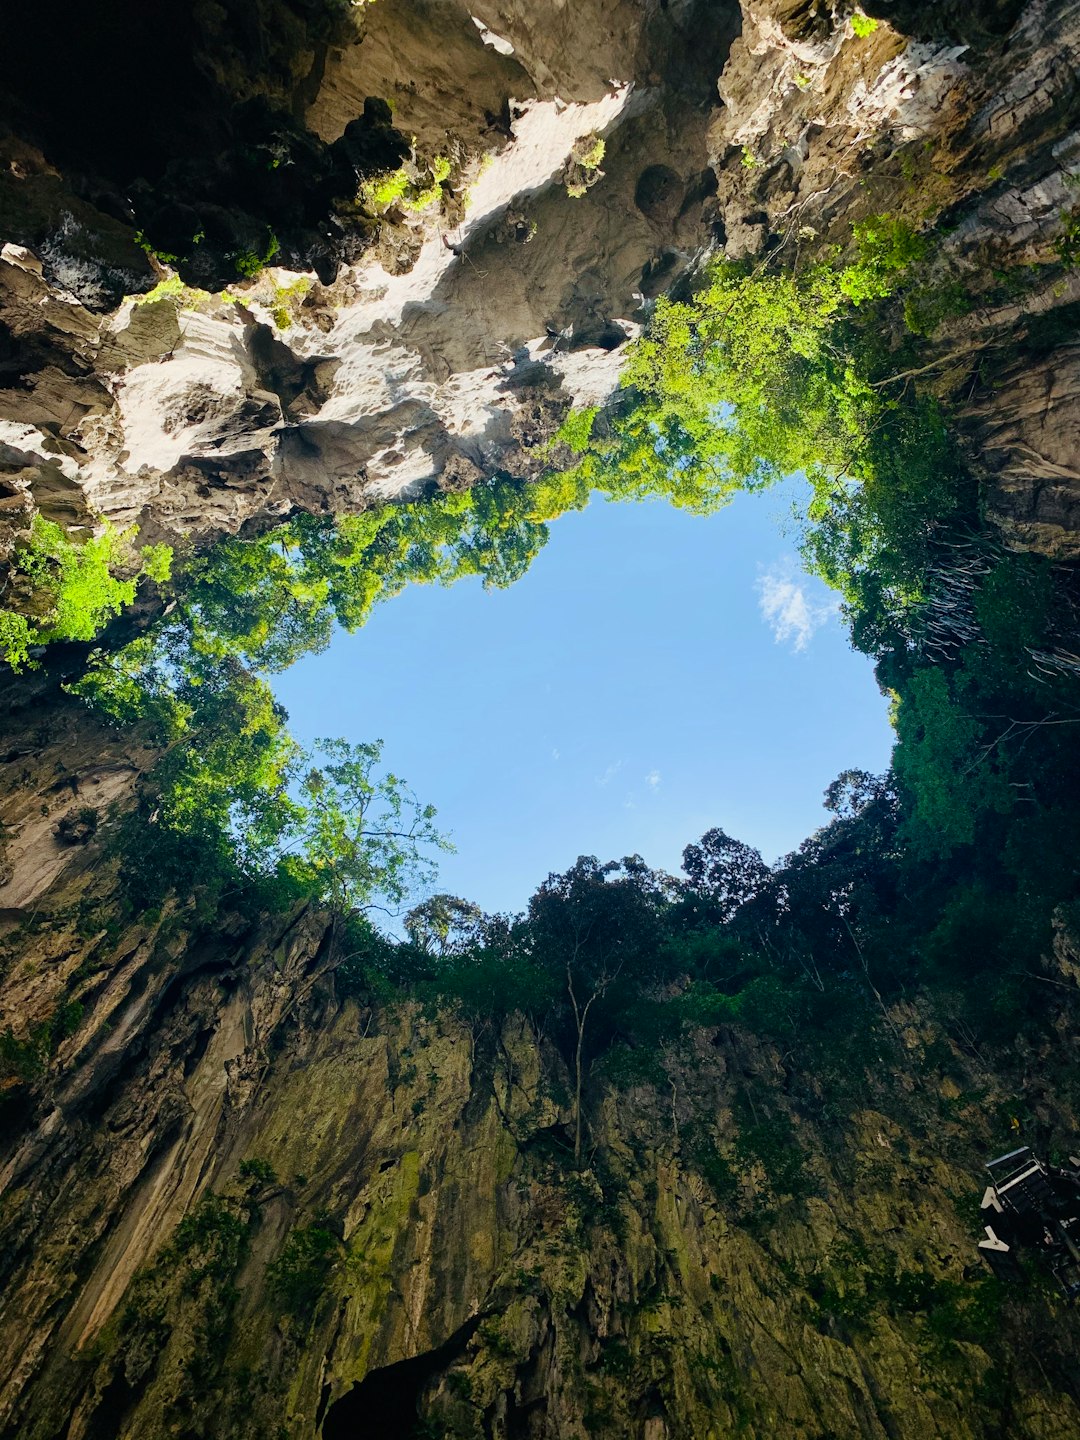 Nature reserve photo spot Batu Caves Kuala Lumpur